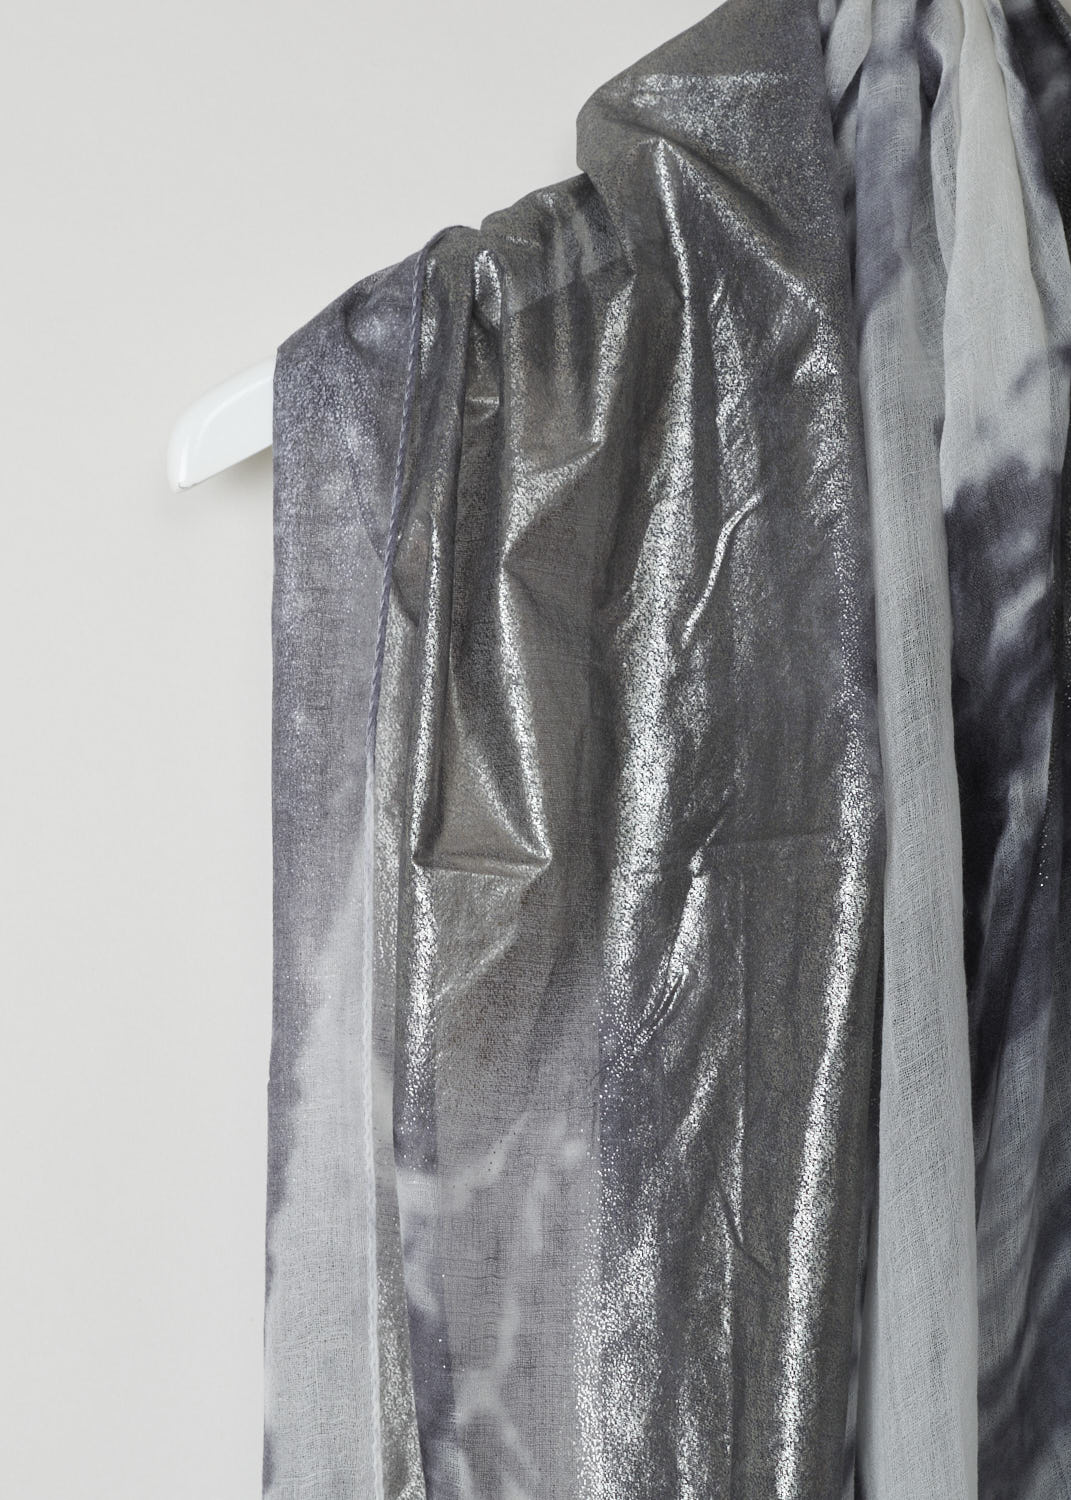 BRUNELLO CUCINELLI, SHAWL IN GREY WITH METALLIC DETAIL, MSCDAG055_CV477, Grey, Detail, Beautiful scarf in grey tones with metallic details. The scarf has a raw hem. 
